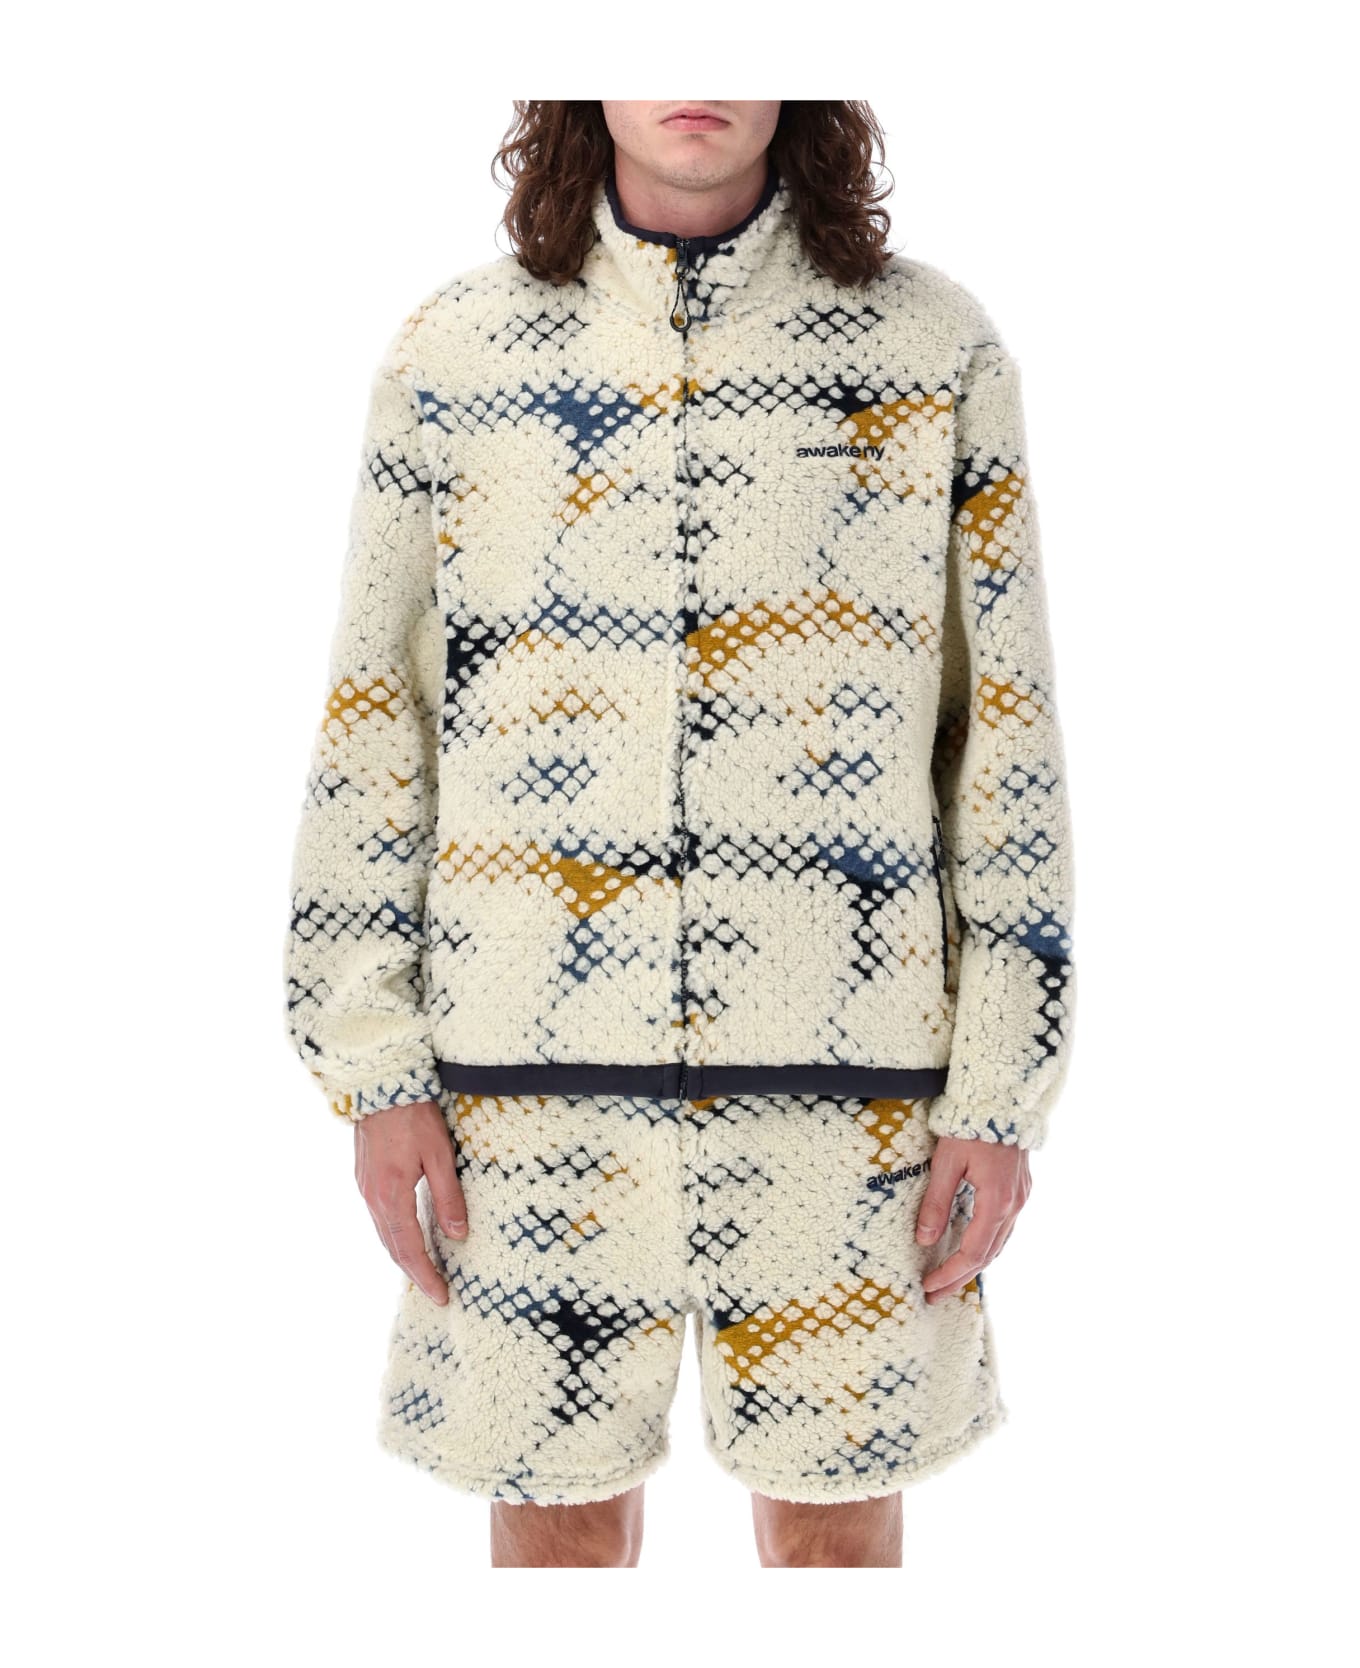 Awake NY Pronted A Fleece Jacket - MULTICOLOR パジャマ